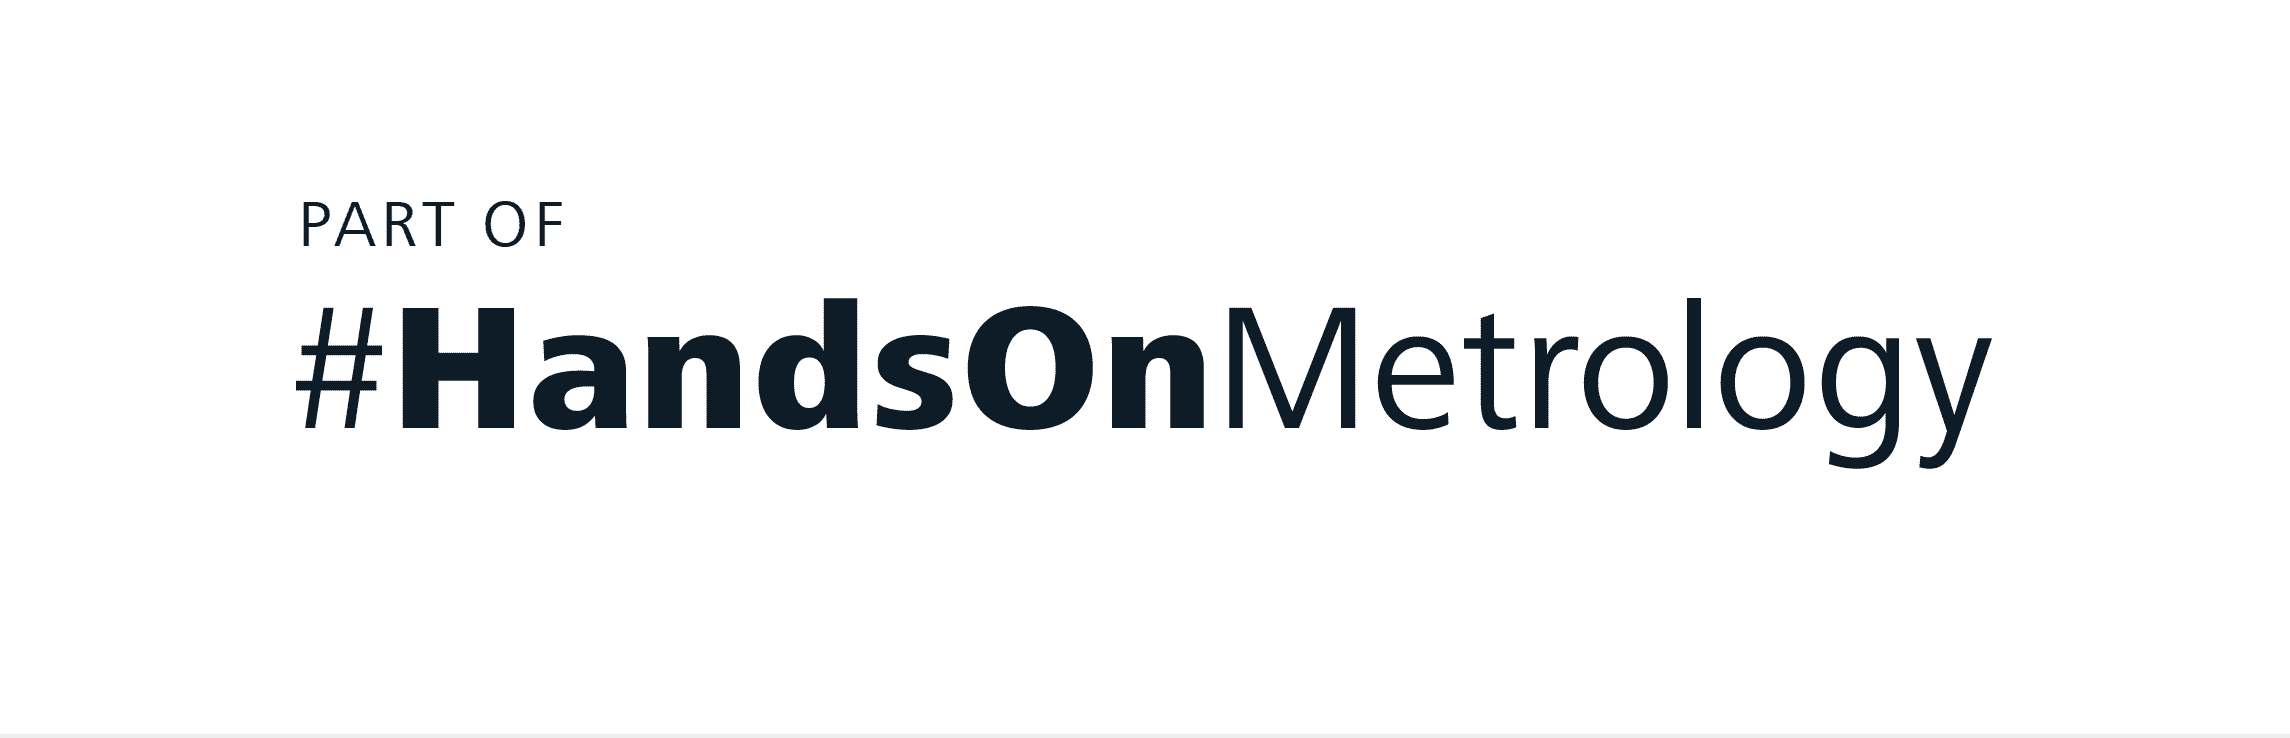 Logo_part_of_HandsonMetrology